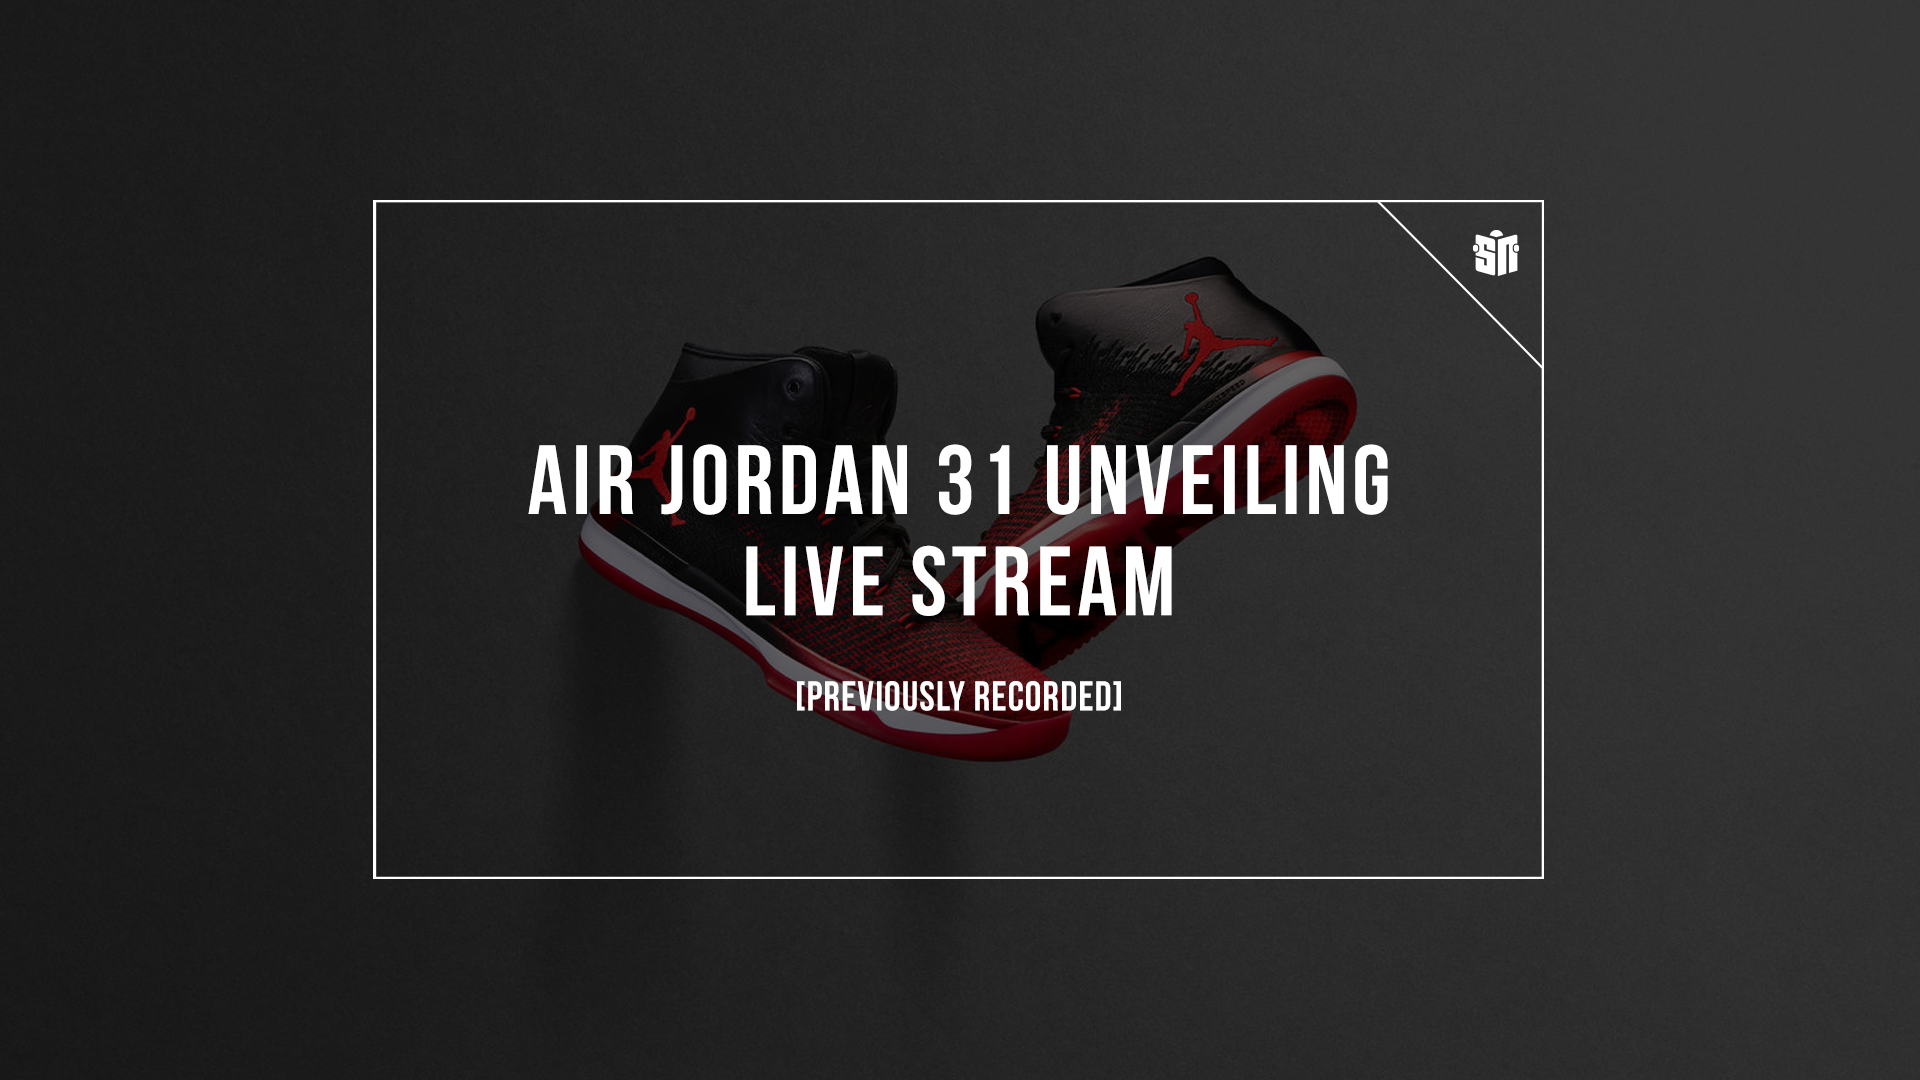 Watch the Air Jordan 31 Unveiling Live Stream